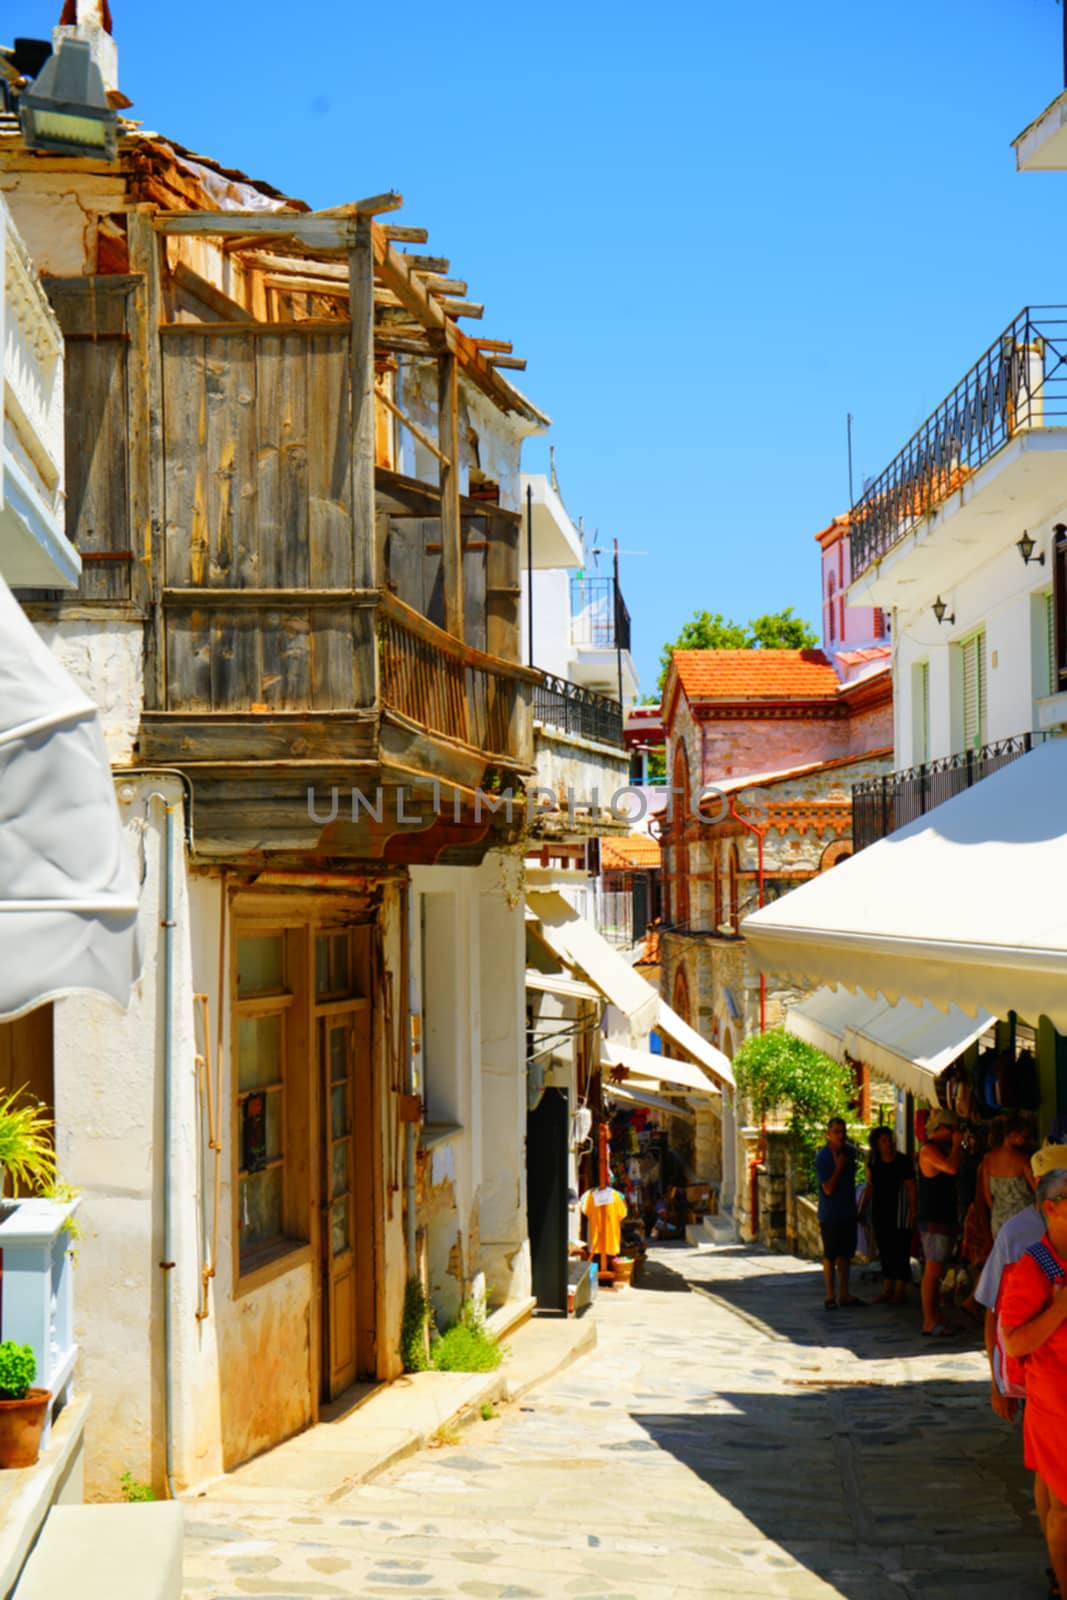 Narrow streets of Skopelos town, Greece by Jindrich_Blecha